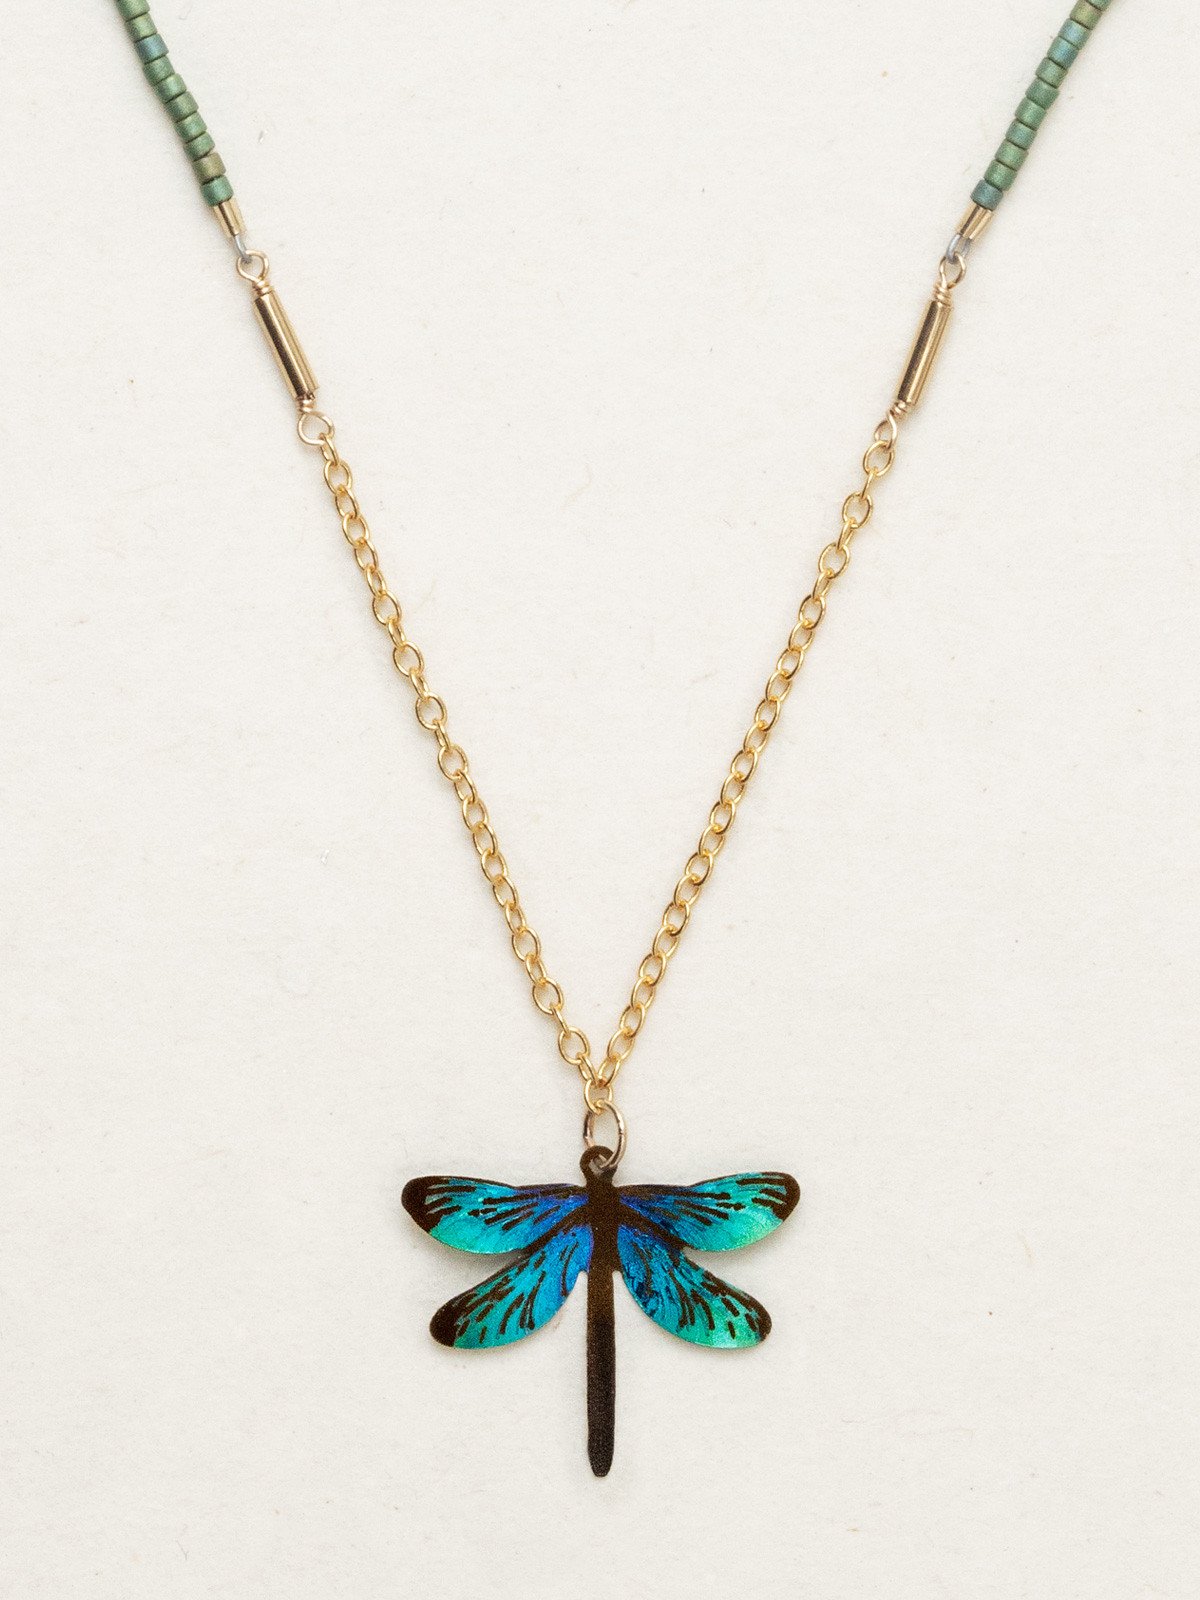 Dragonfly necklace by Holly Yashi